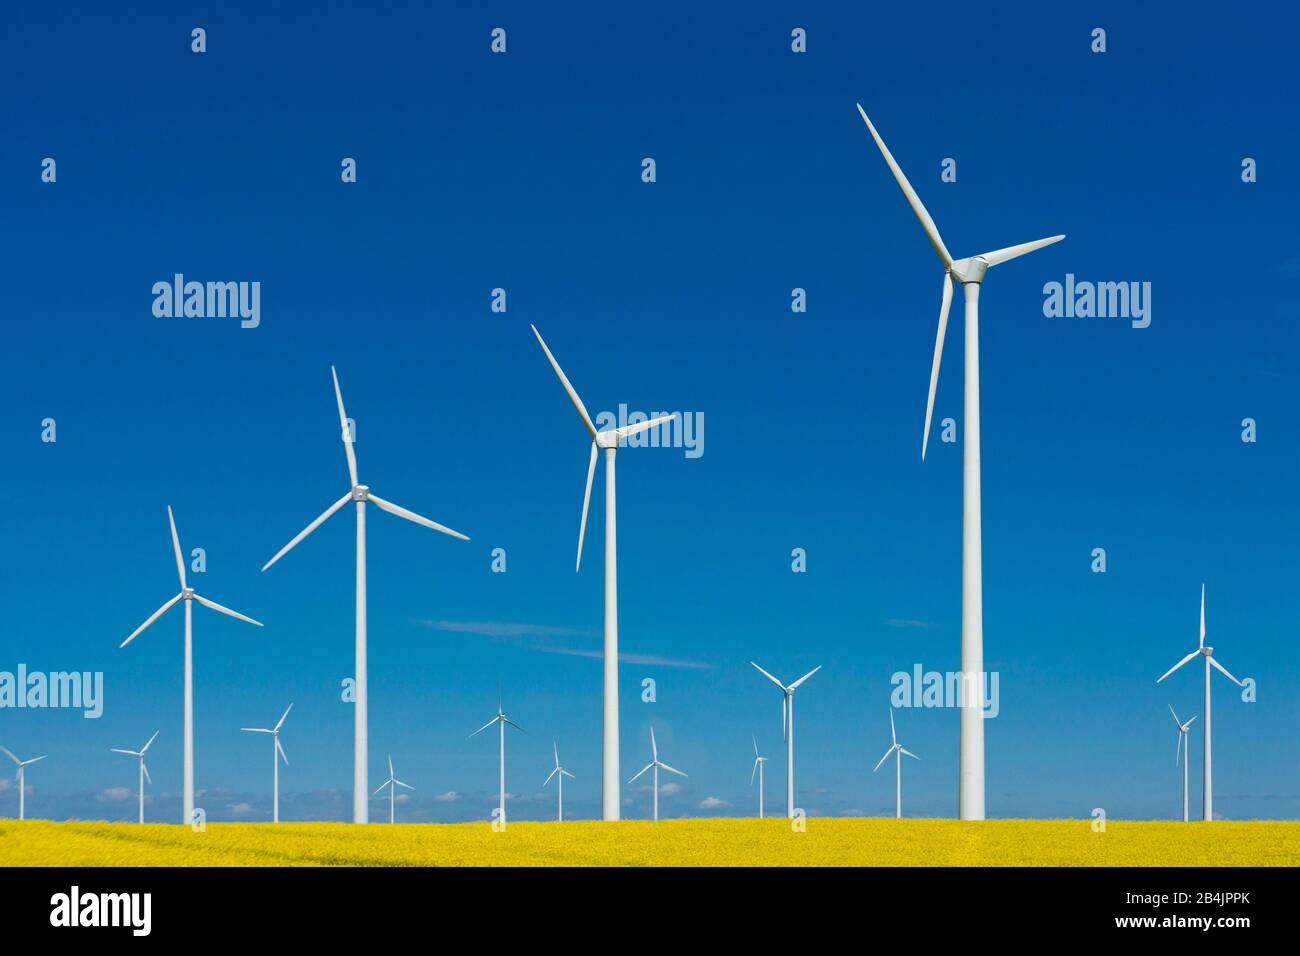 Windräder vor blauem Himmel, Symbolbild Windkraft, erneuerbare Energie Foto de stock